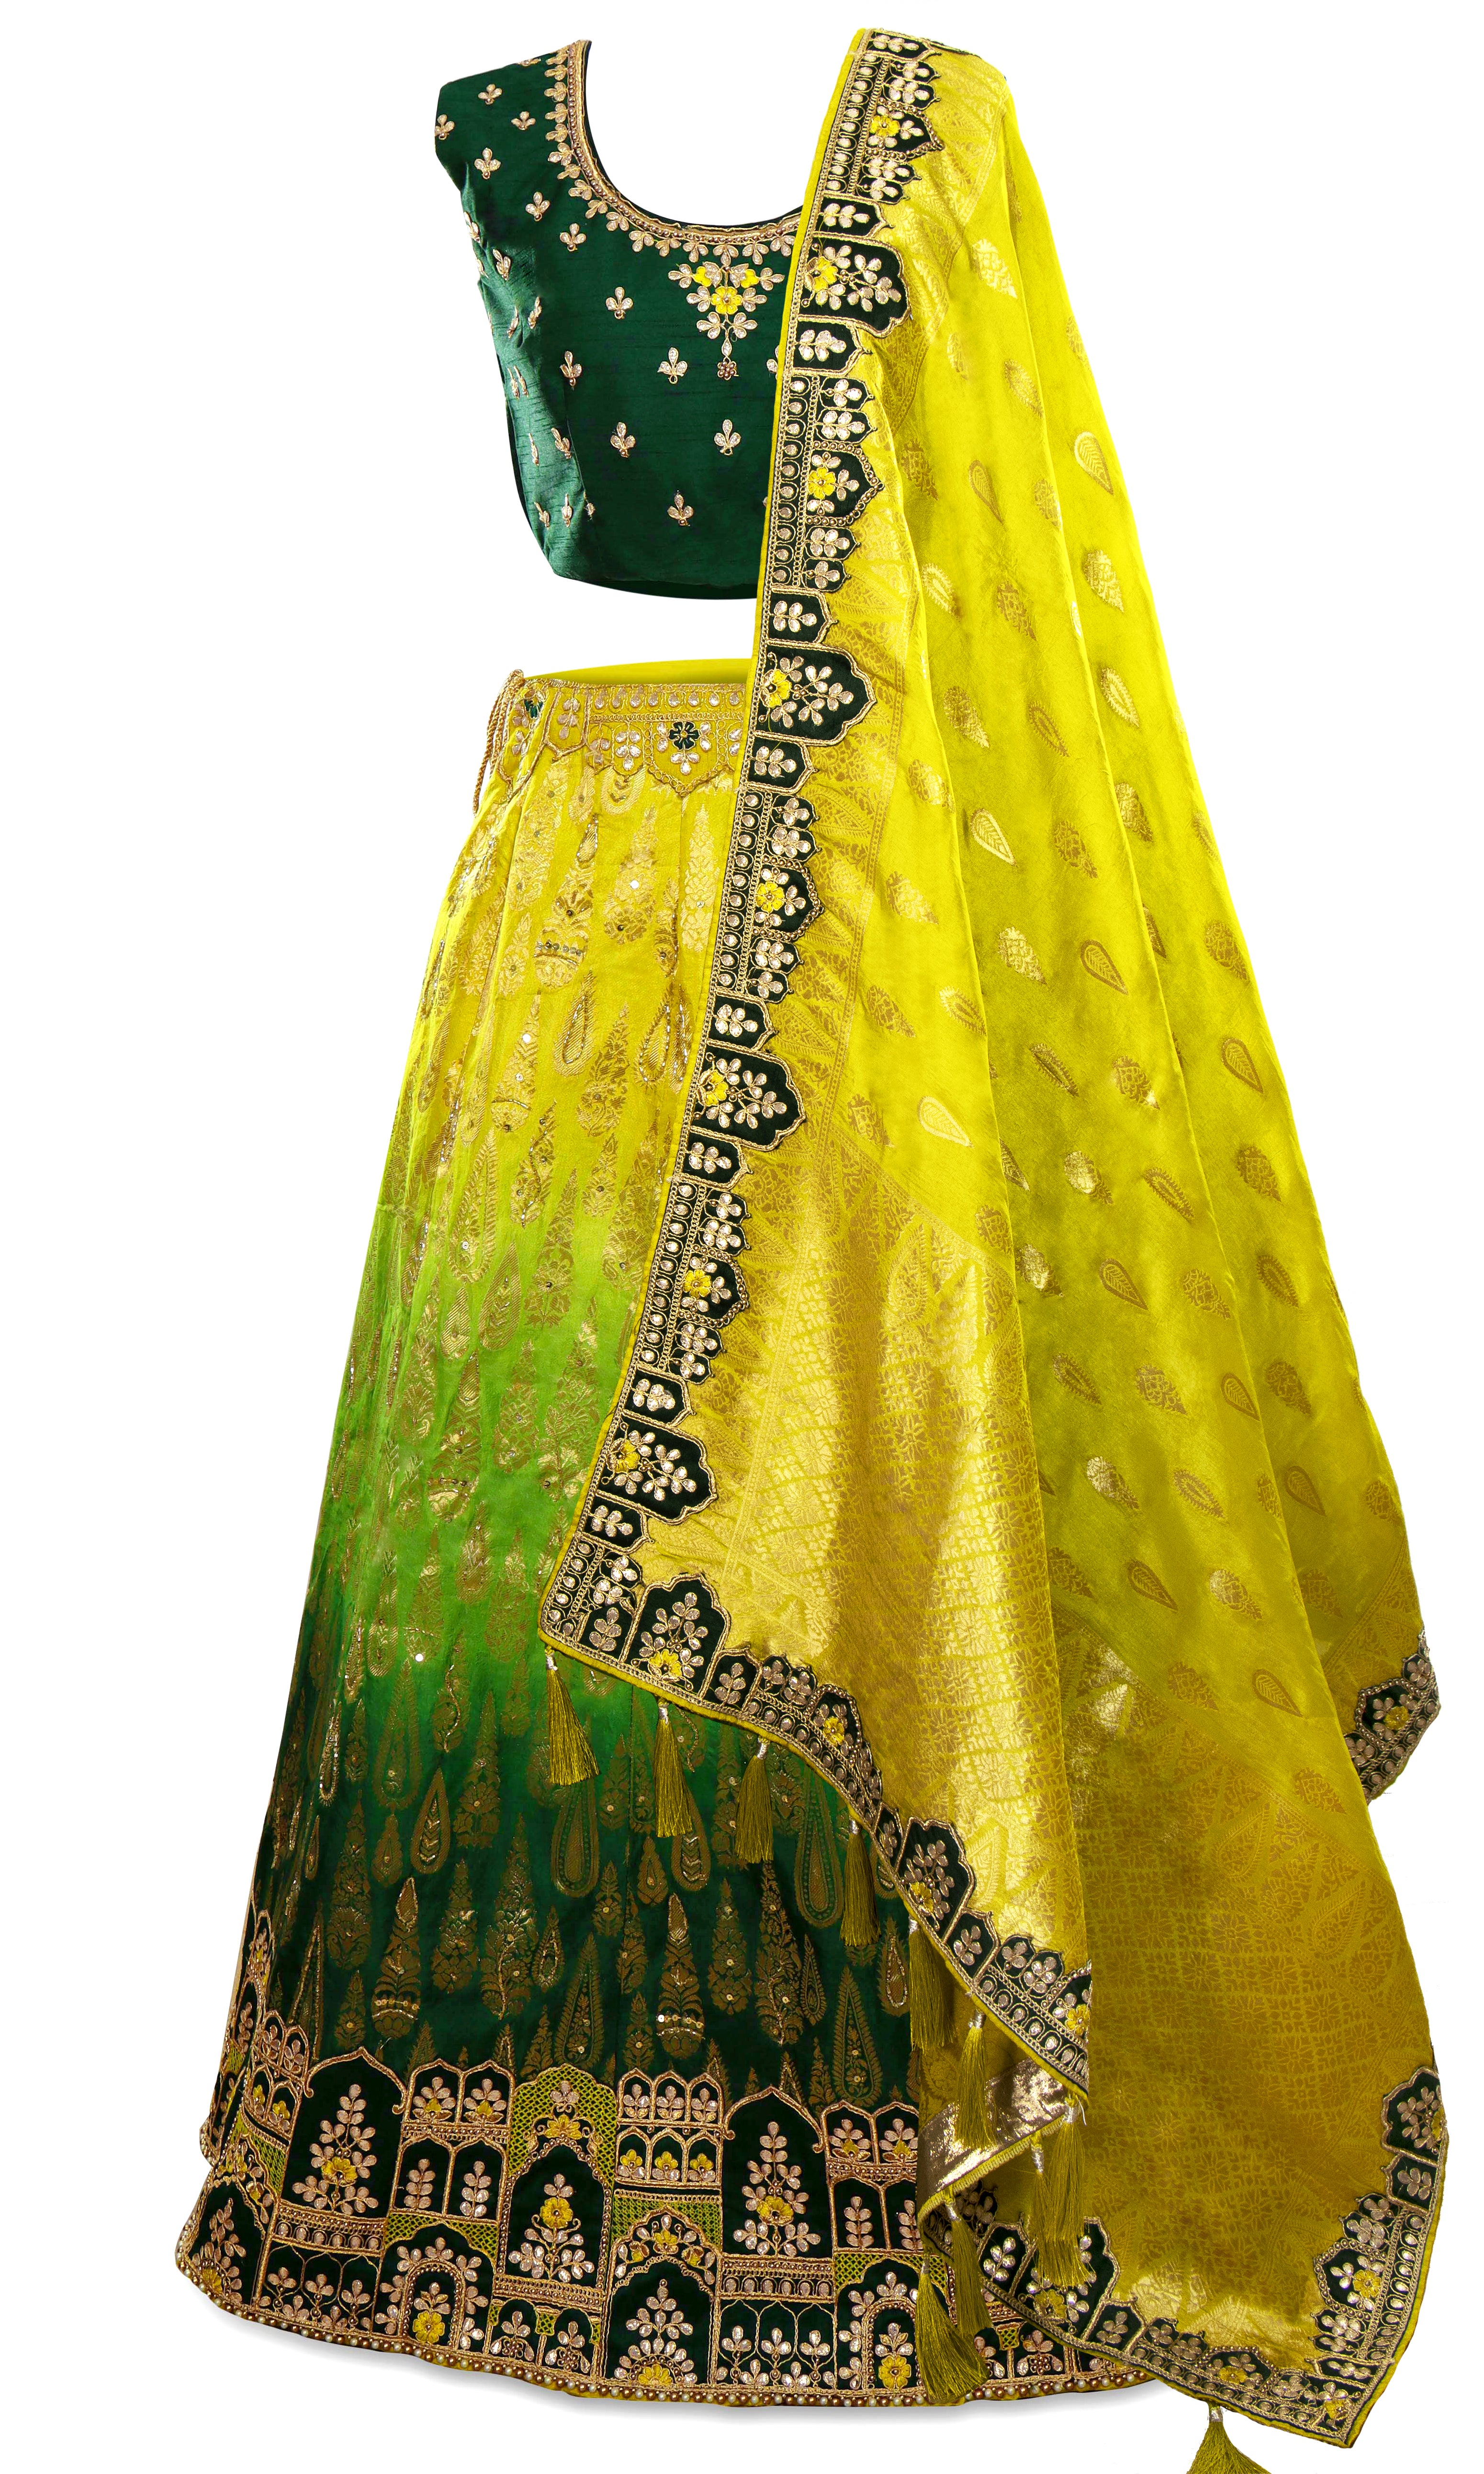 Banarsari silk lehenga with blouse, skirt, and the dupatta gold prints embroidered